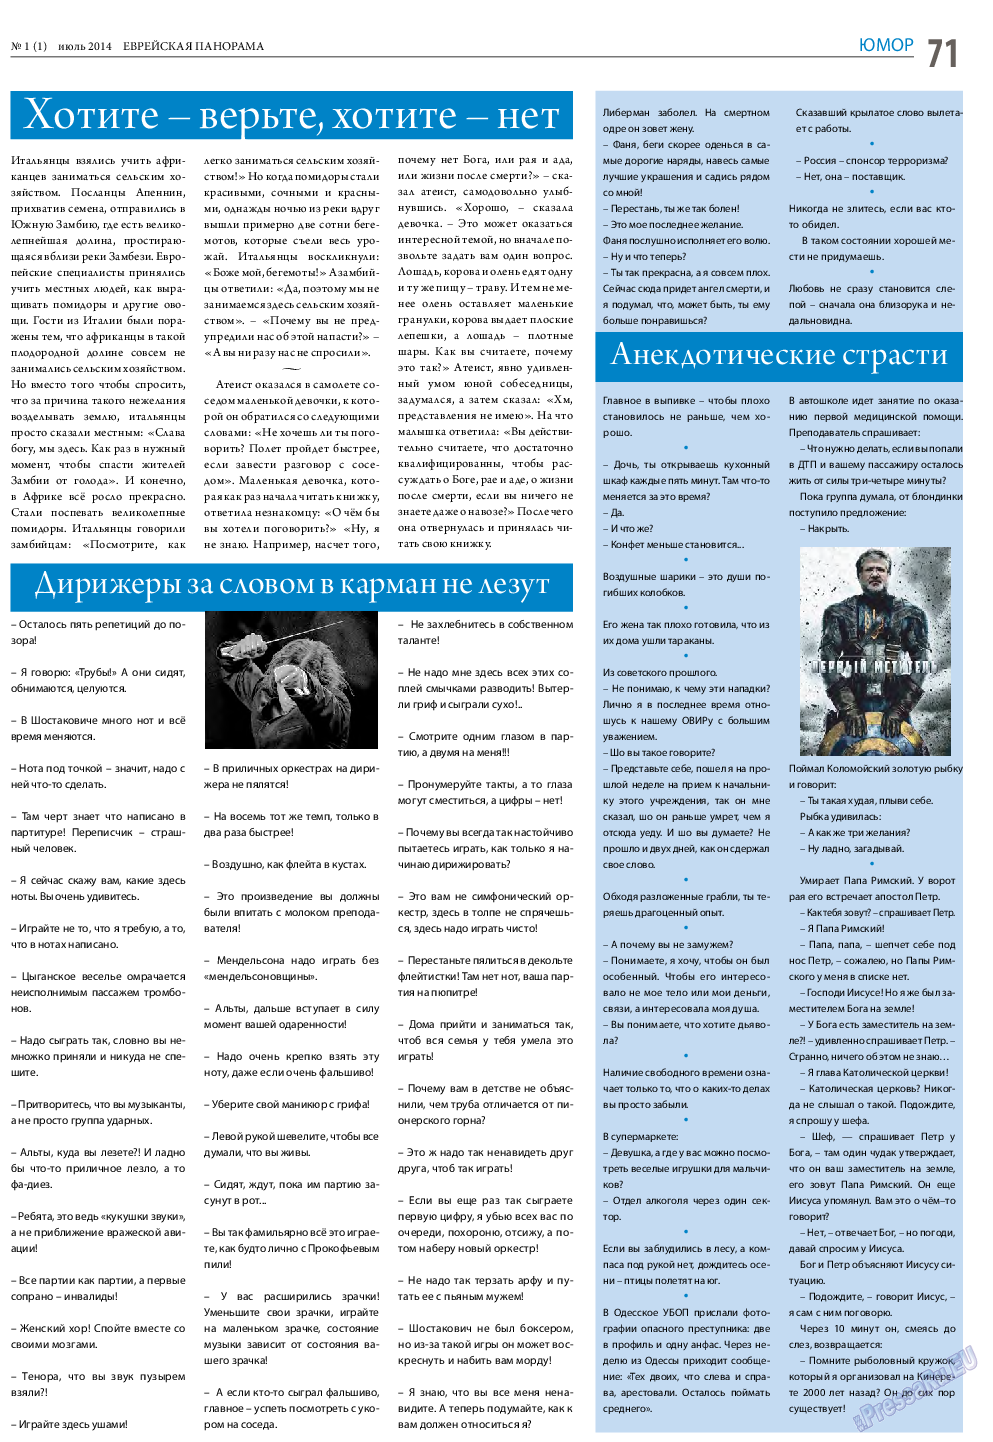 Еврейская панорама, газета. 2014 №1 стр.71